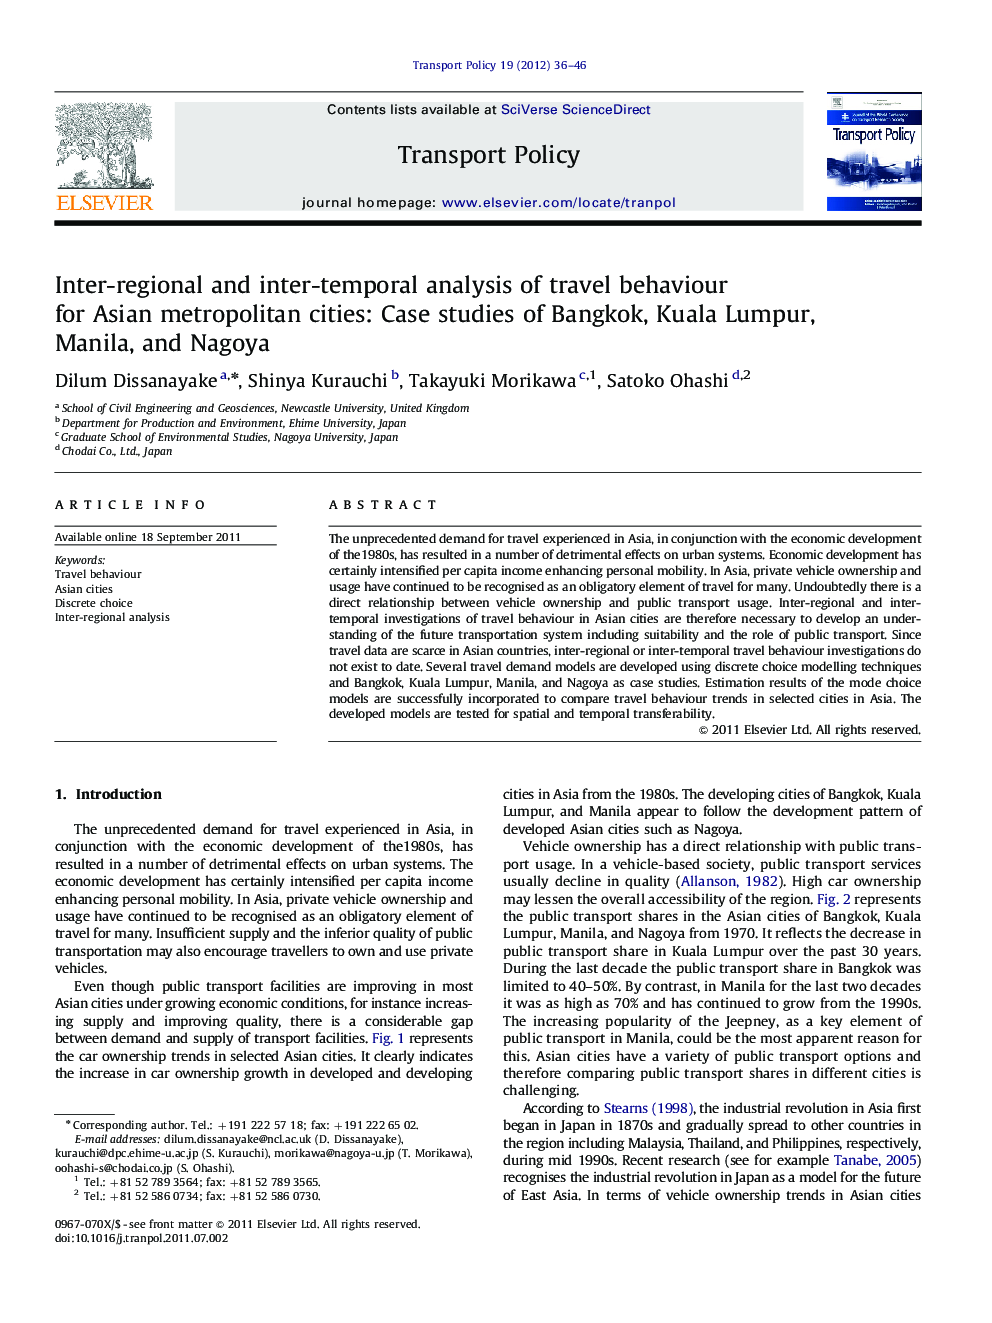 Inter-regional and inter-temporal analysis of travel behaviour for Asian metropolitan cities: Case studies of Bangkok, Kuala Lumpur, Manila, and Nagoya